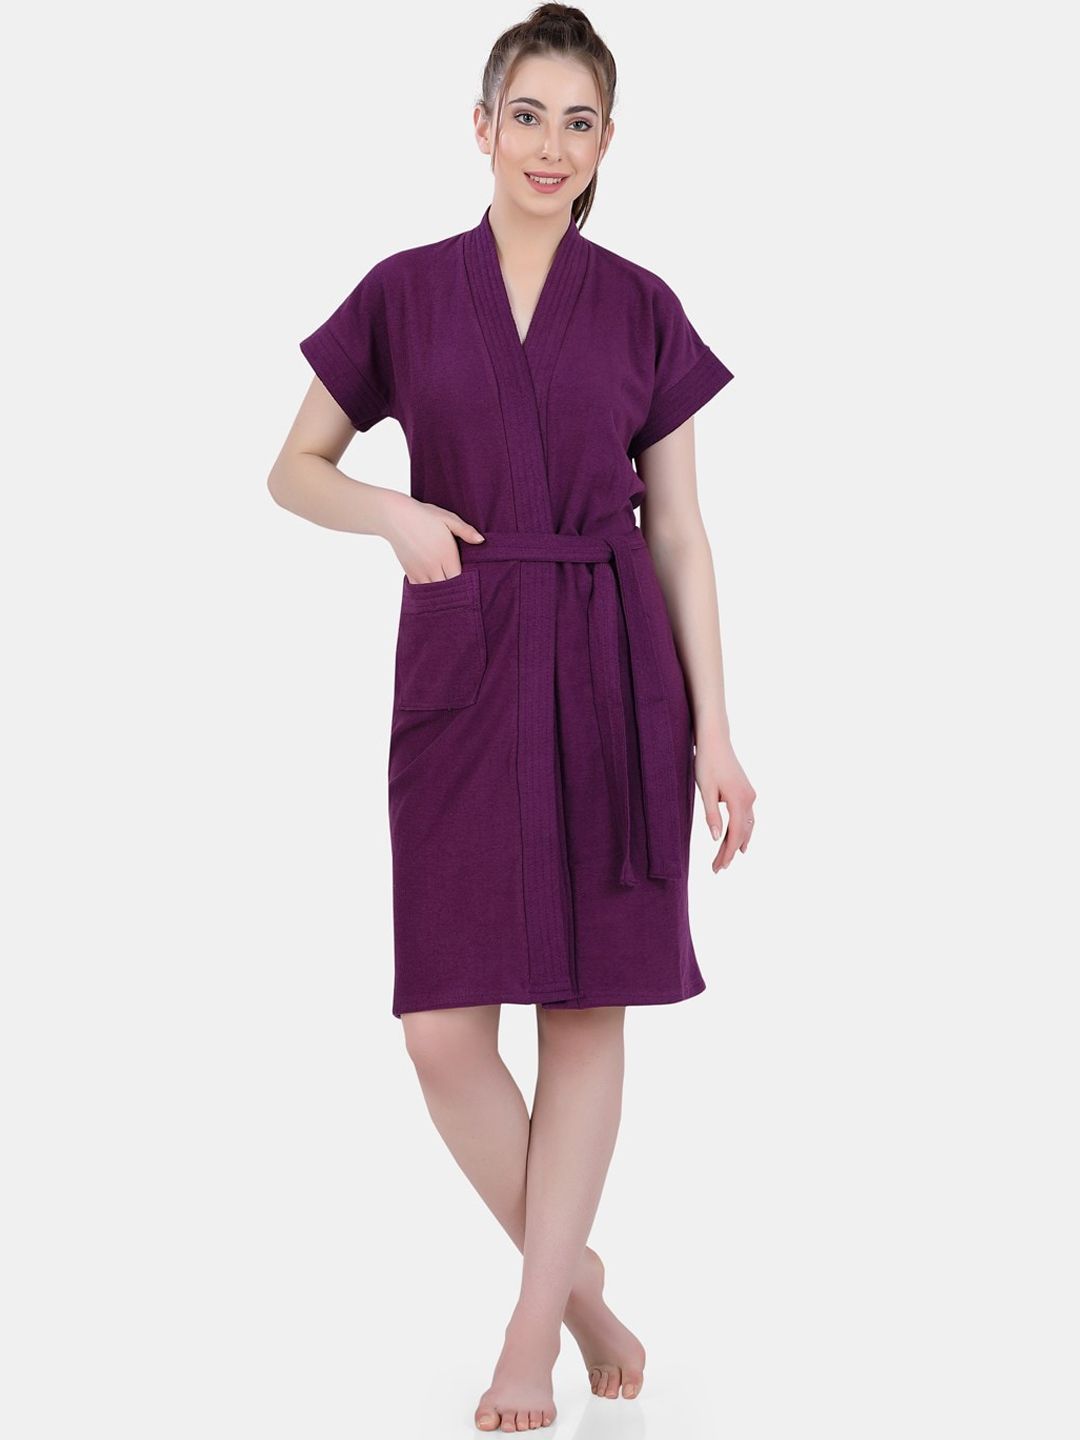 POPLINS Woman Purple Solid Bathrobe Price in India